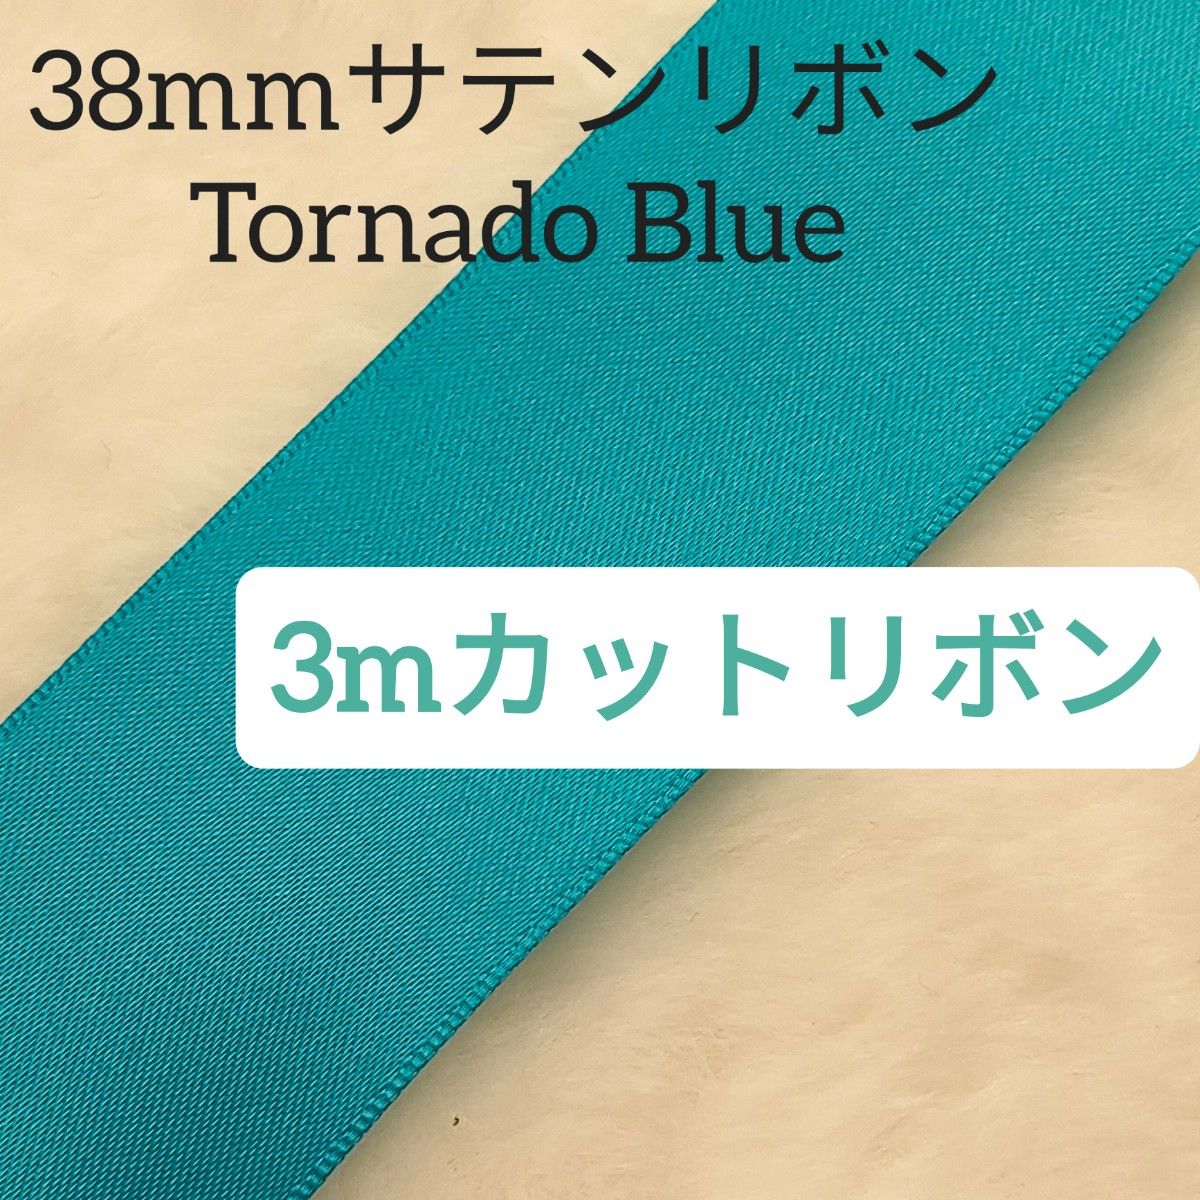 3m/カットリボン/両面サテンリボン/Tornado Blue色番号343/38mm幅ブルーグリーン系